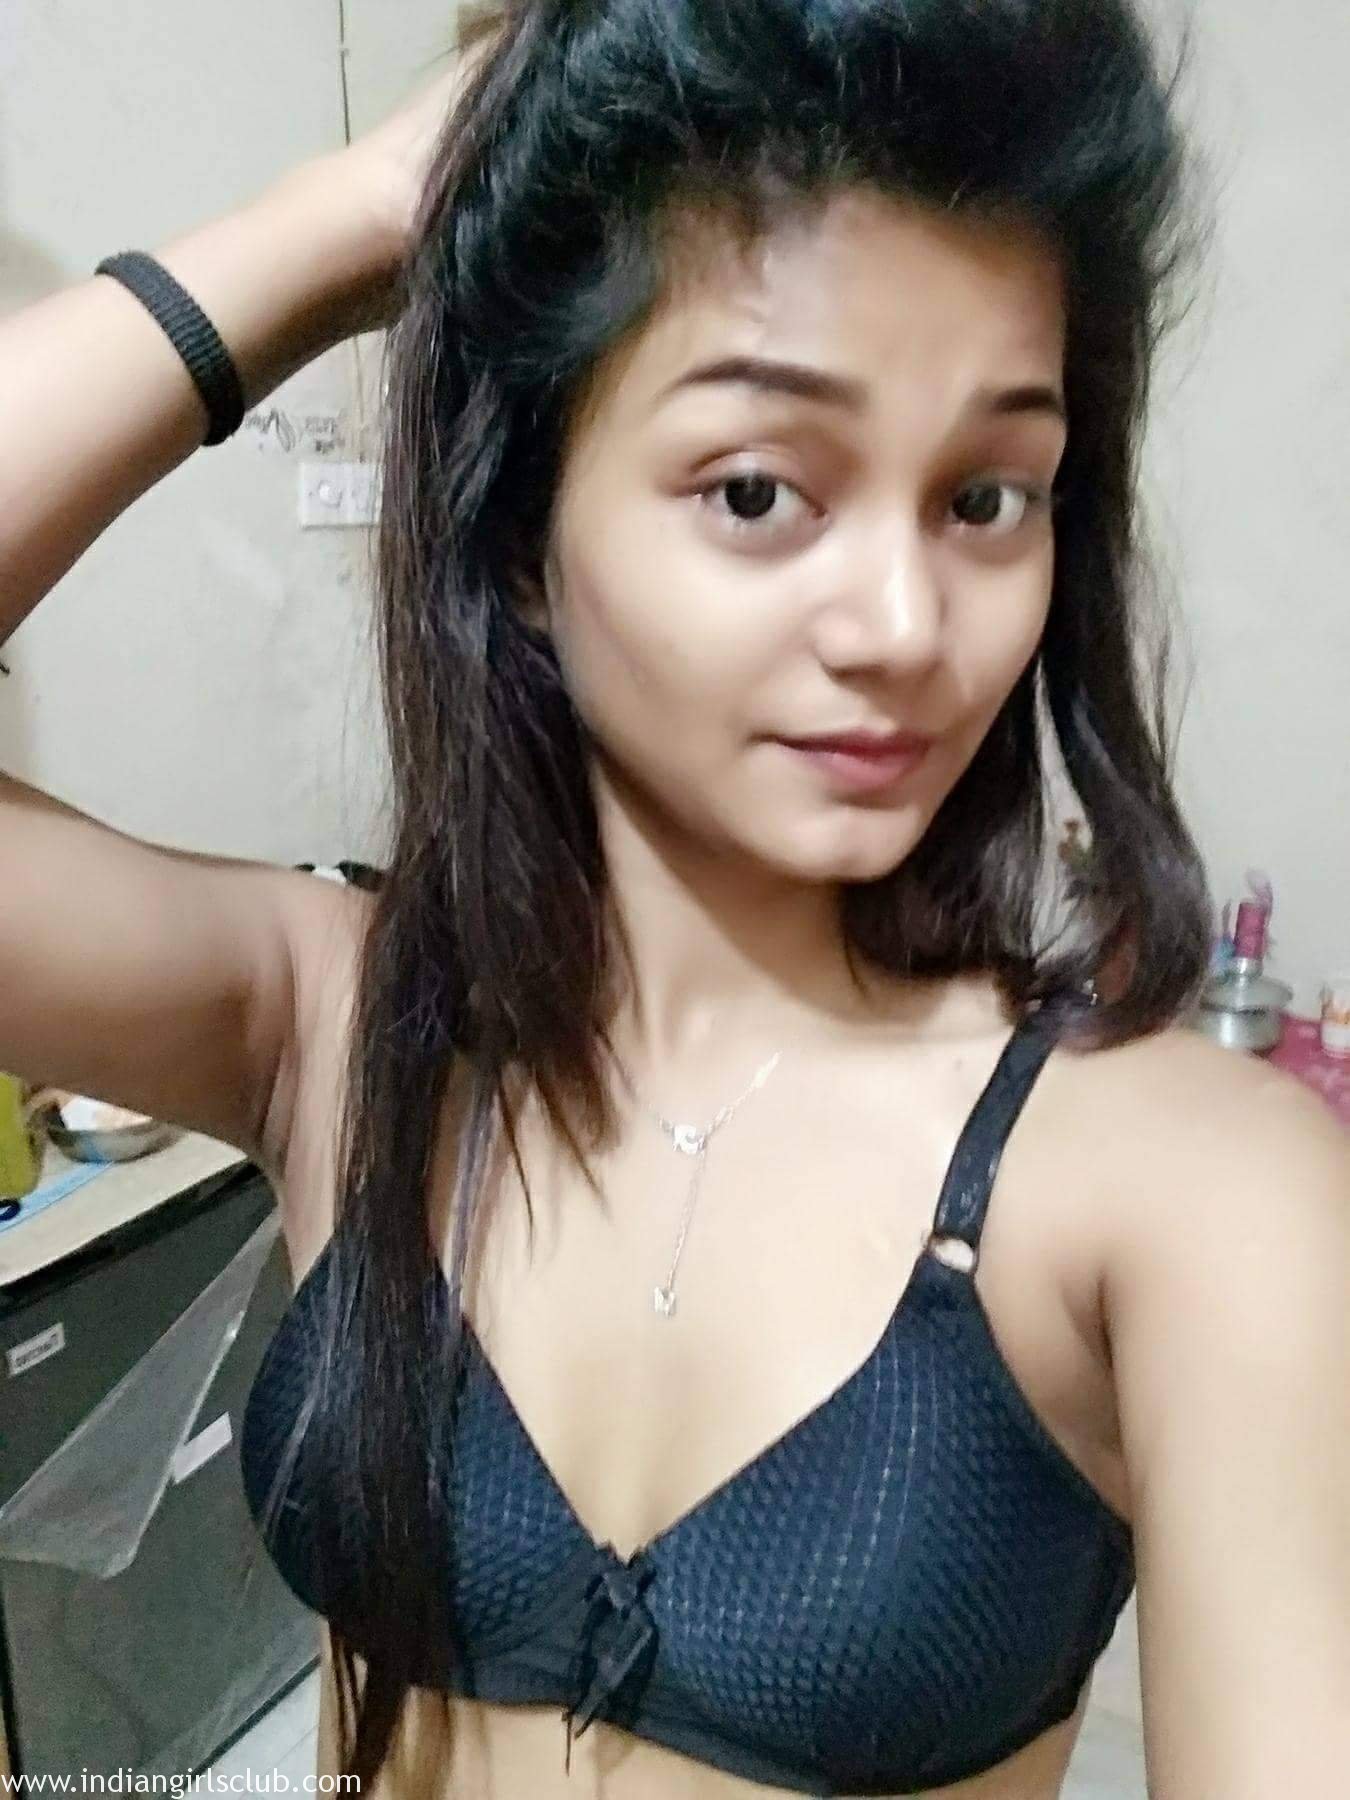 juicy_indian_teen_homemade_porn_2 - Indian Girls Club